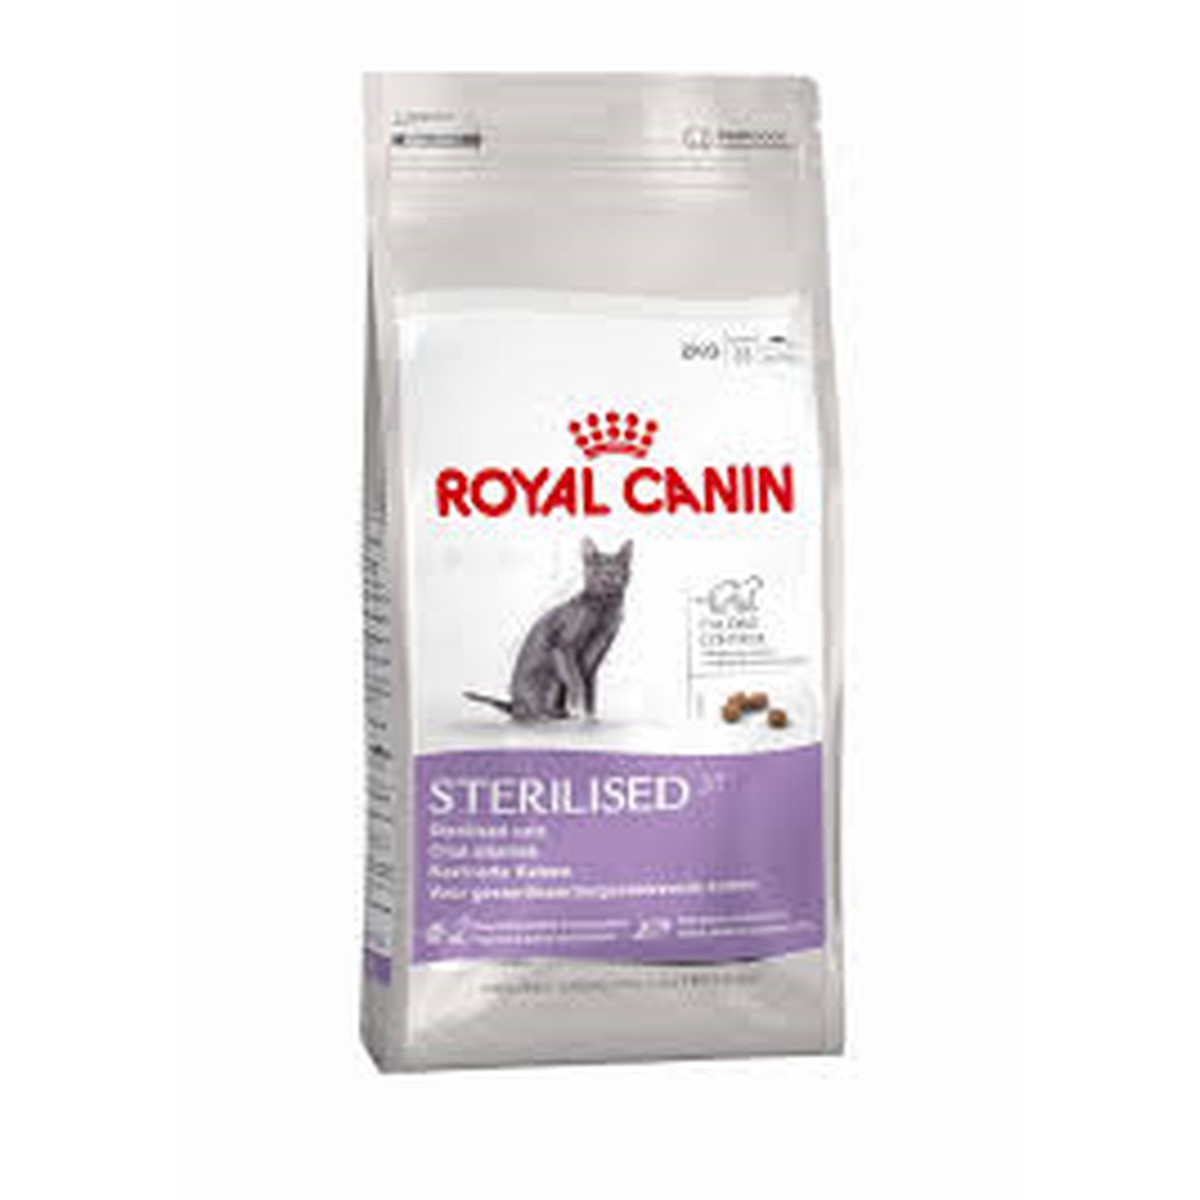 Royal Canin  Sterilised 400 g  400 g